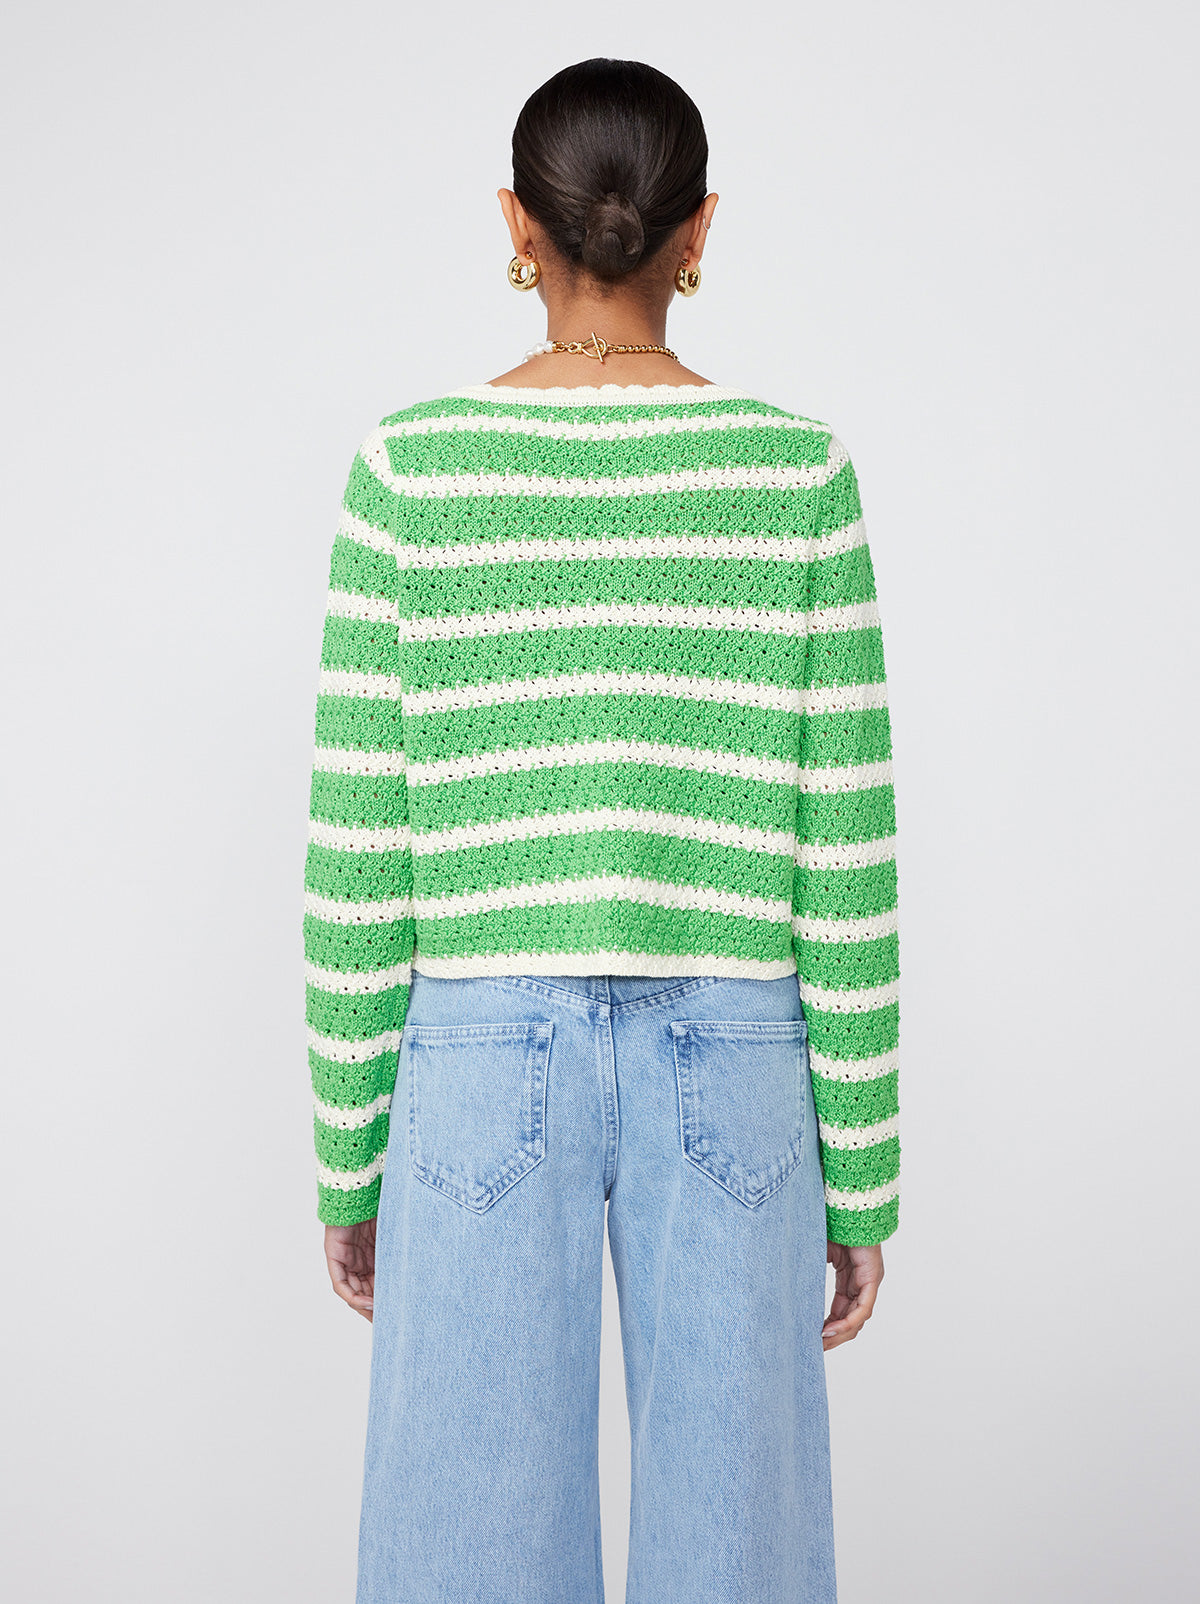 Dionne Green Stripe Knit Cardigan By KITRI Studio